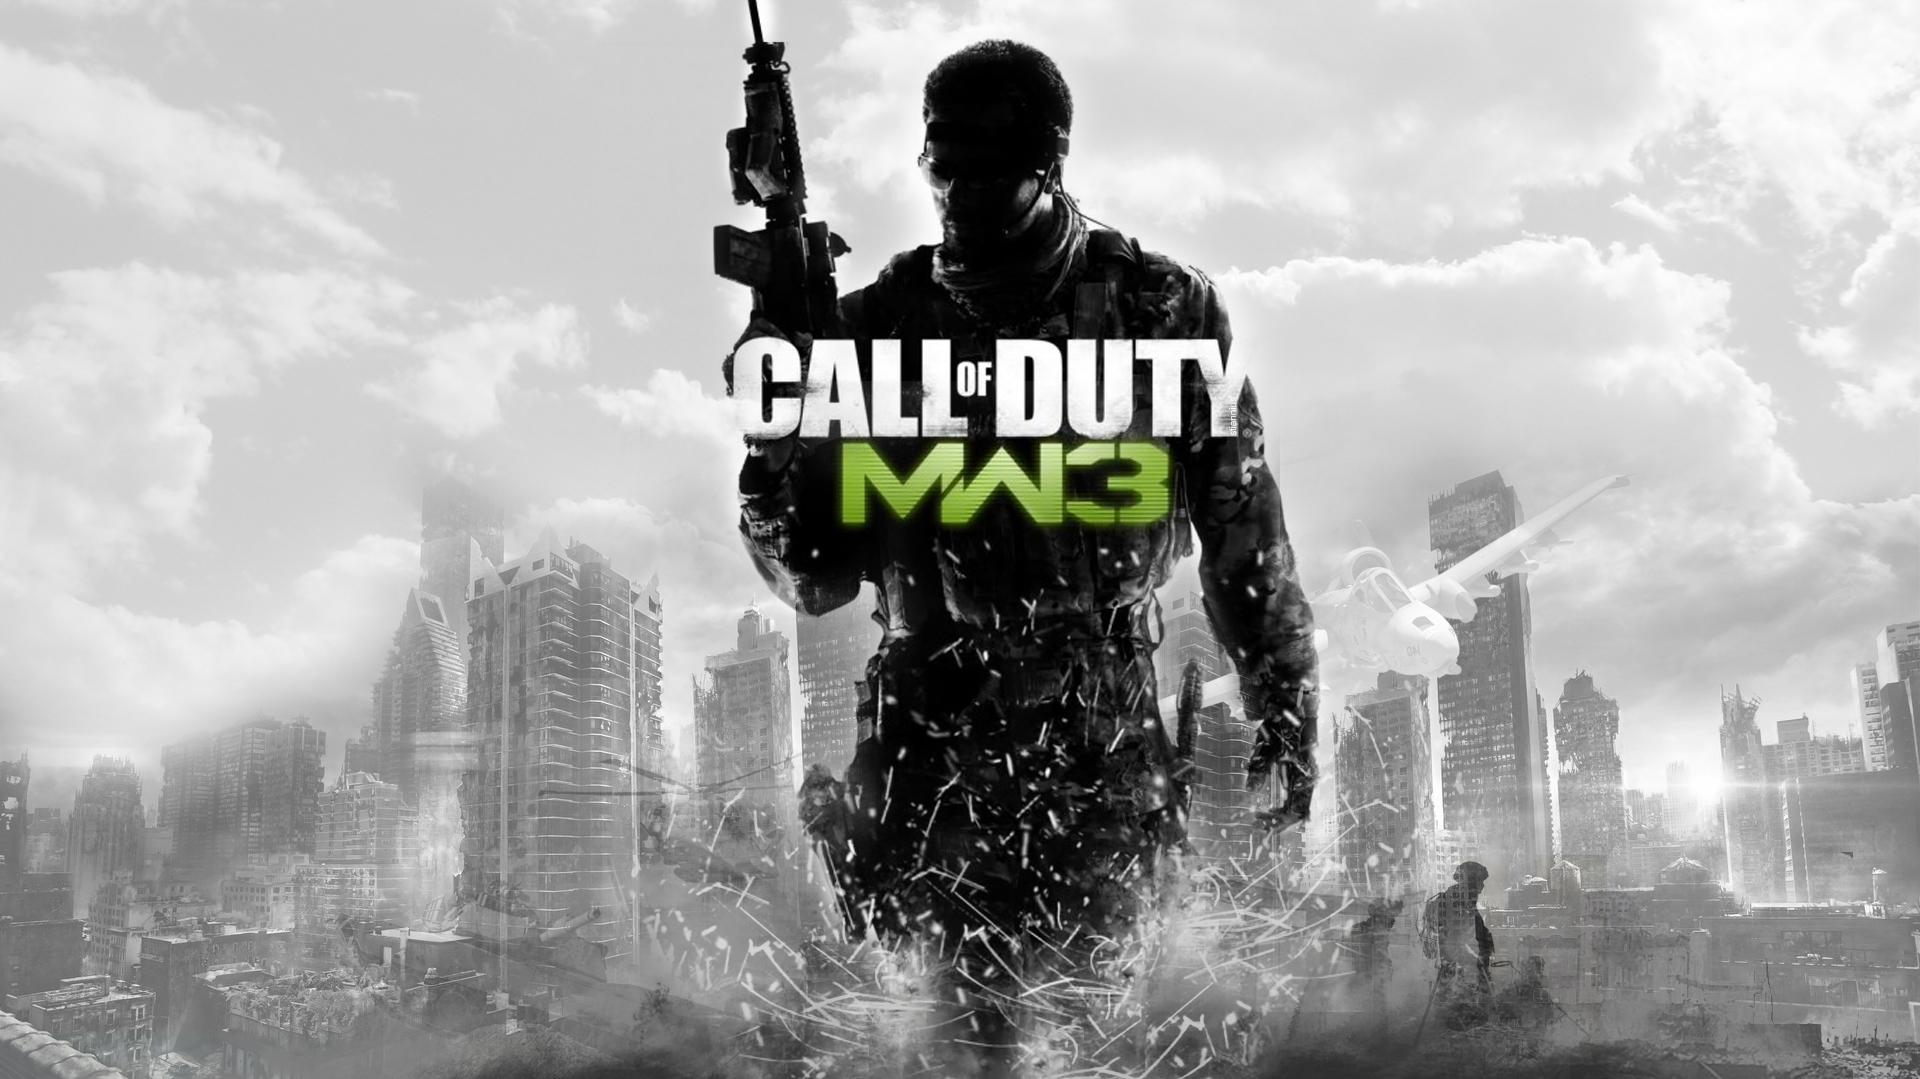 Call Of Duty Mw3 Wallpaper